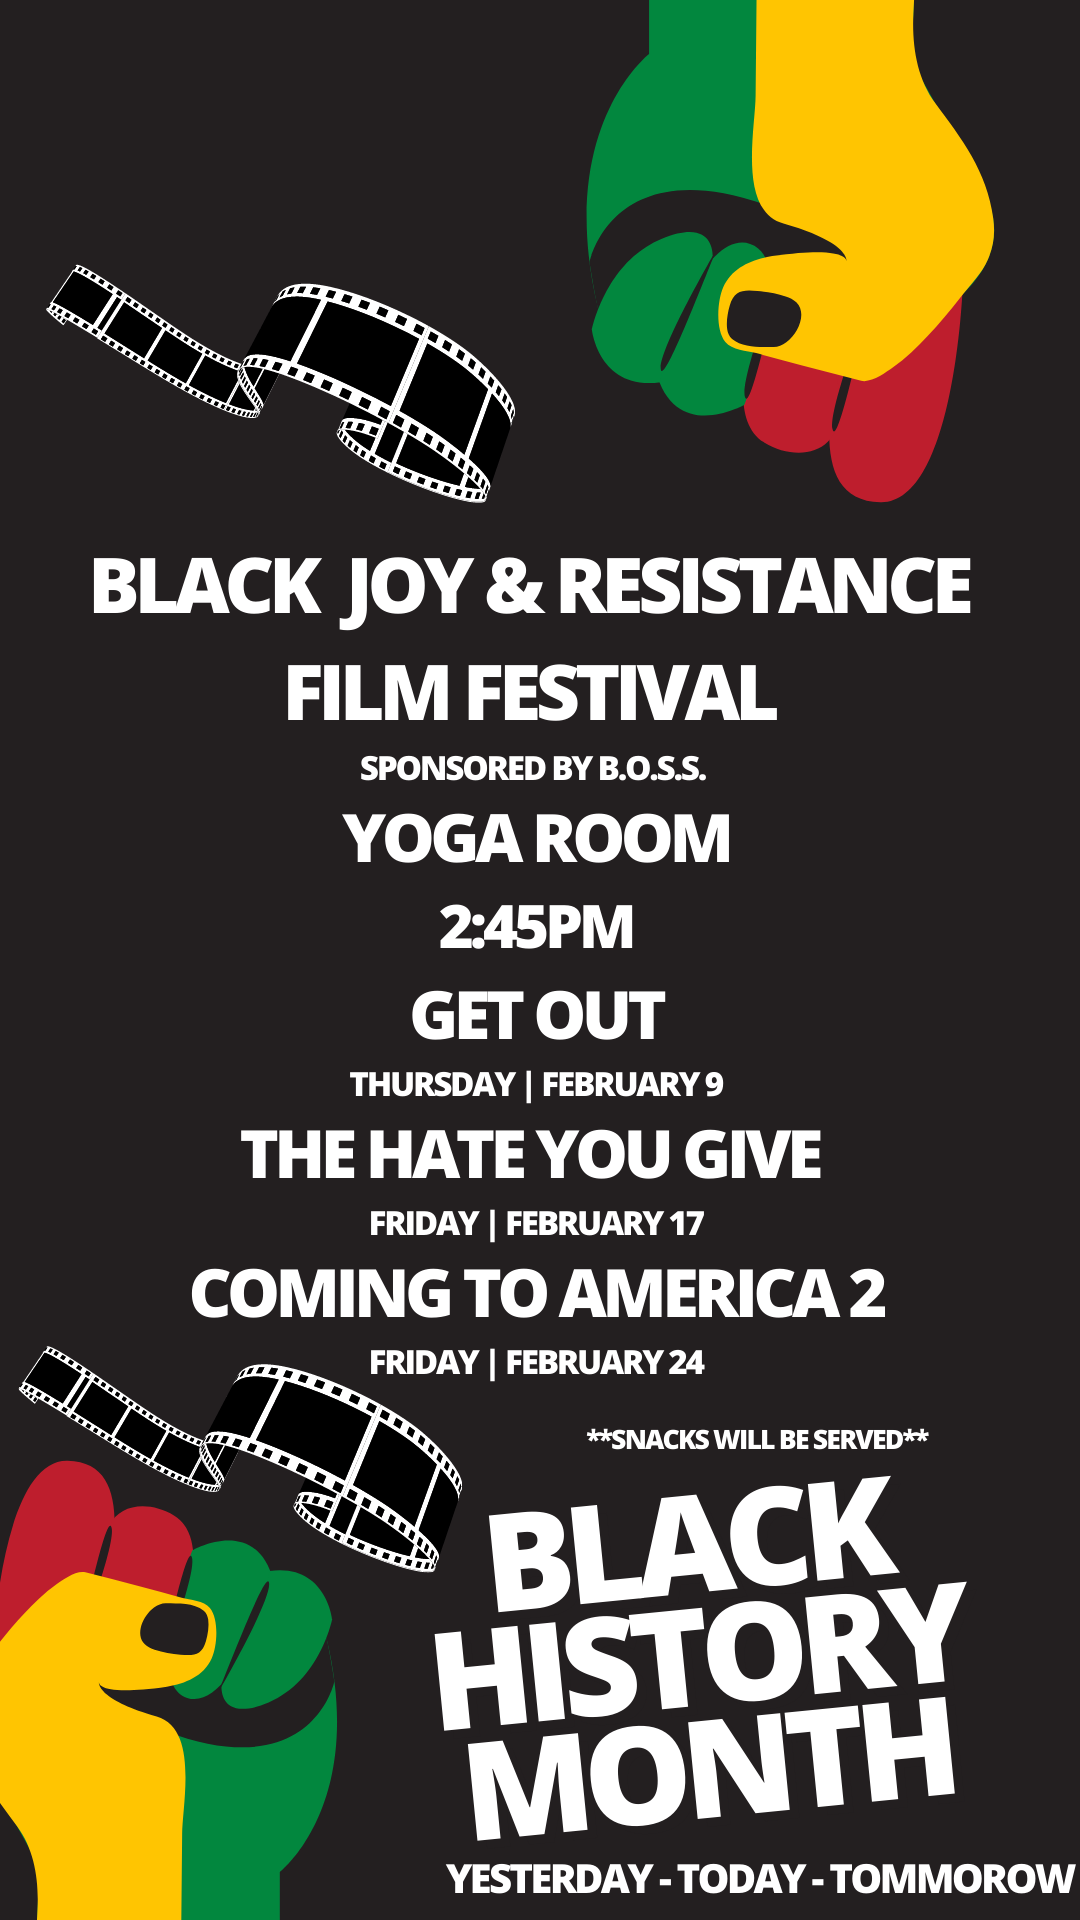 Black Joy & Resistance Film Festival